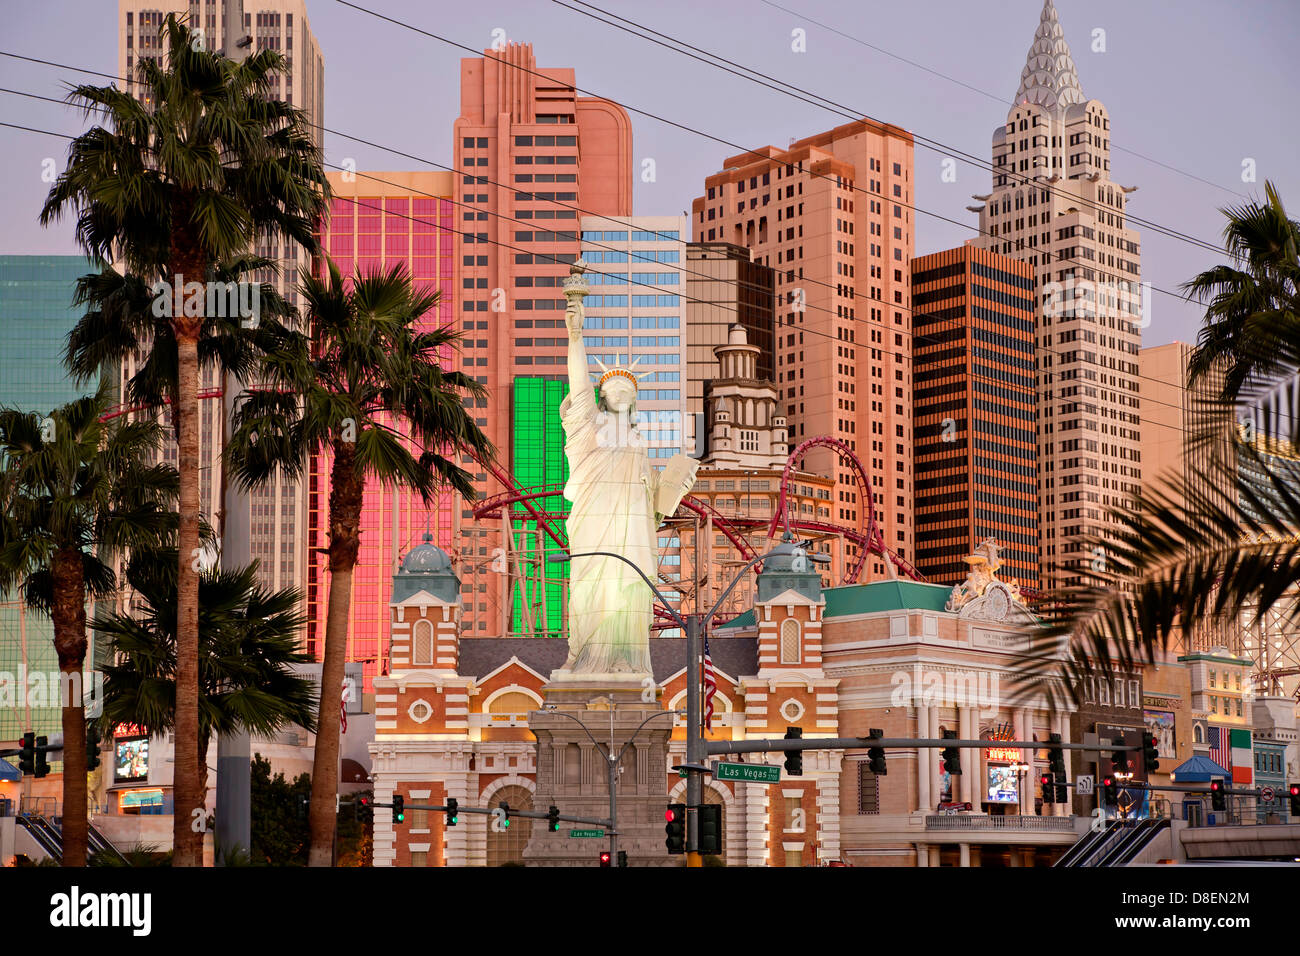 New York-New York Hotel & Casino in Las Vegas, Nevada, United States of America, USA Stock Photo